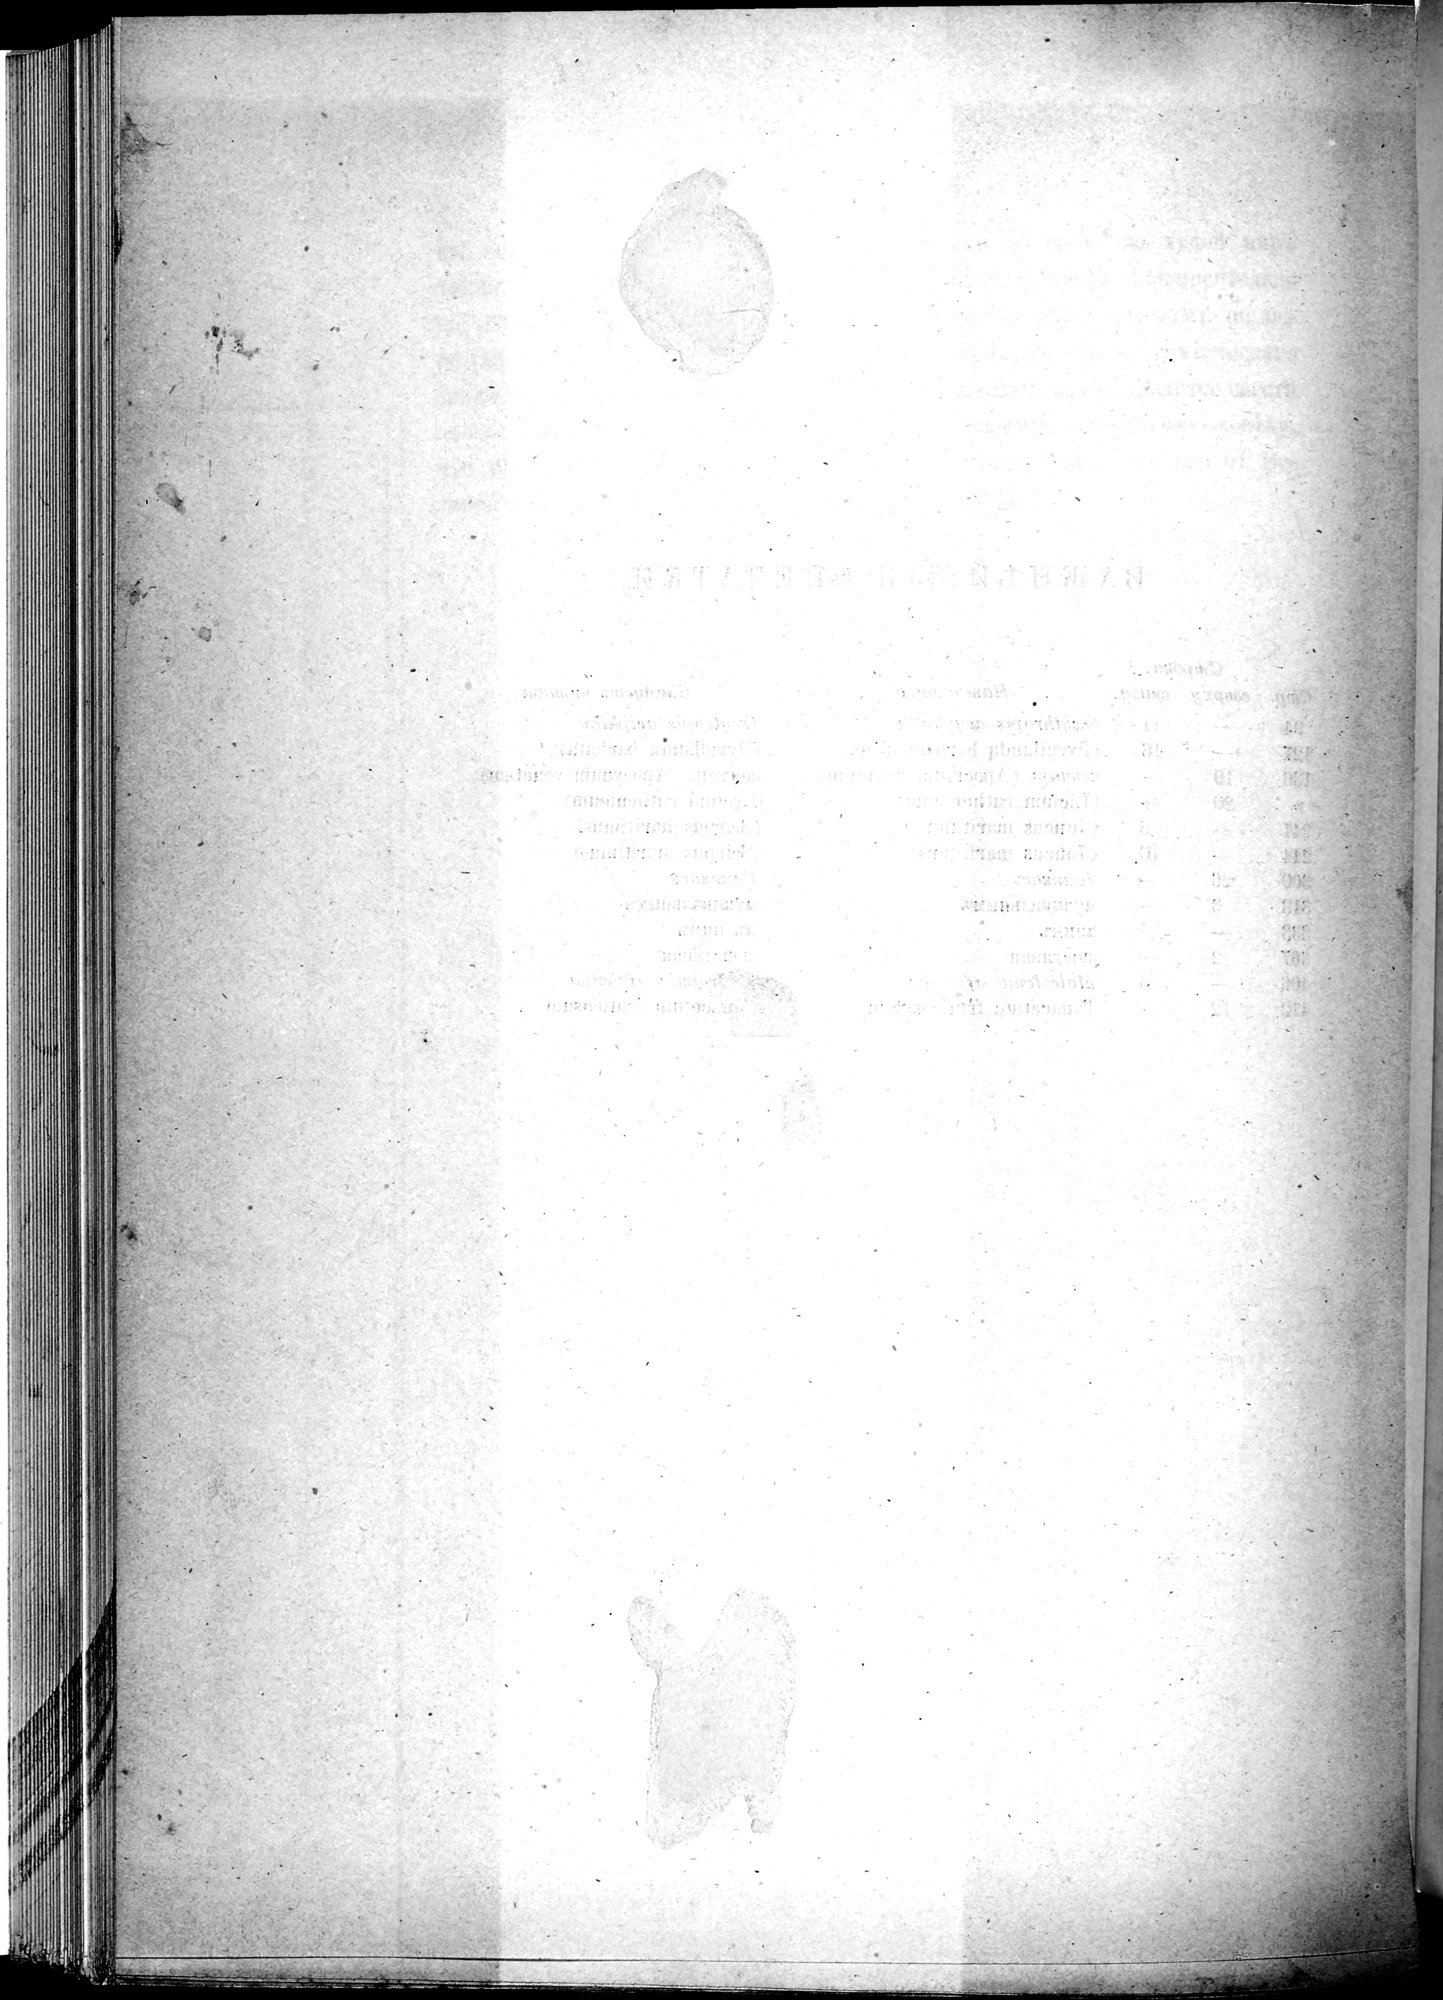 Ot Kiakhty na Istoki Zheltoi Rieki : vol.1 / Page 614 (Grayscale High Resolution Image)